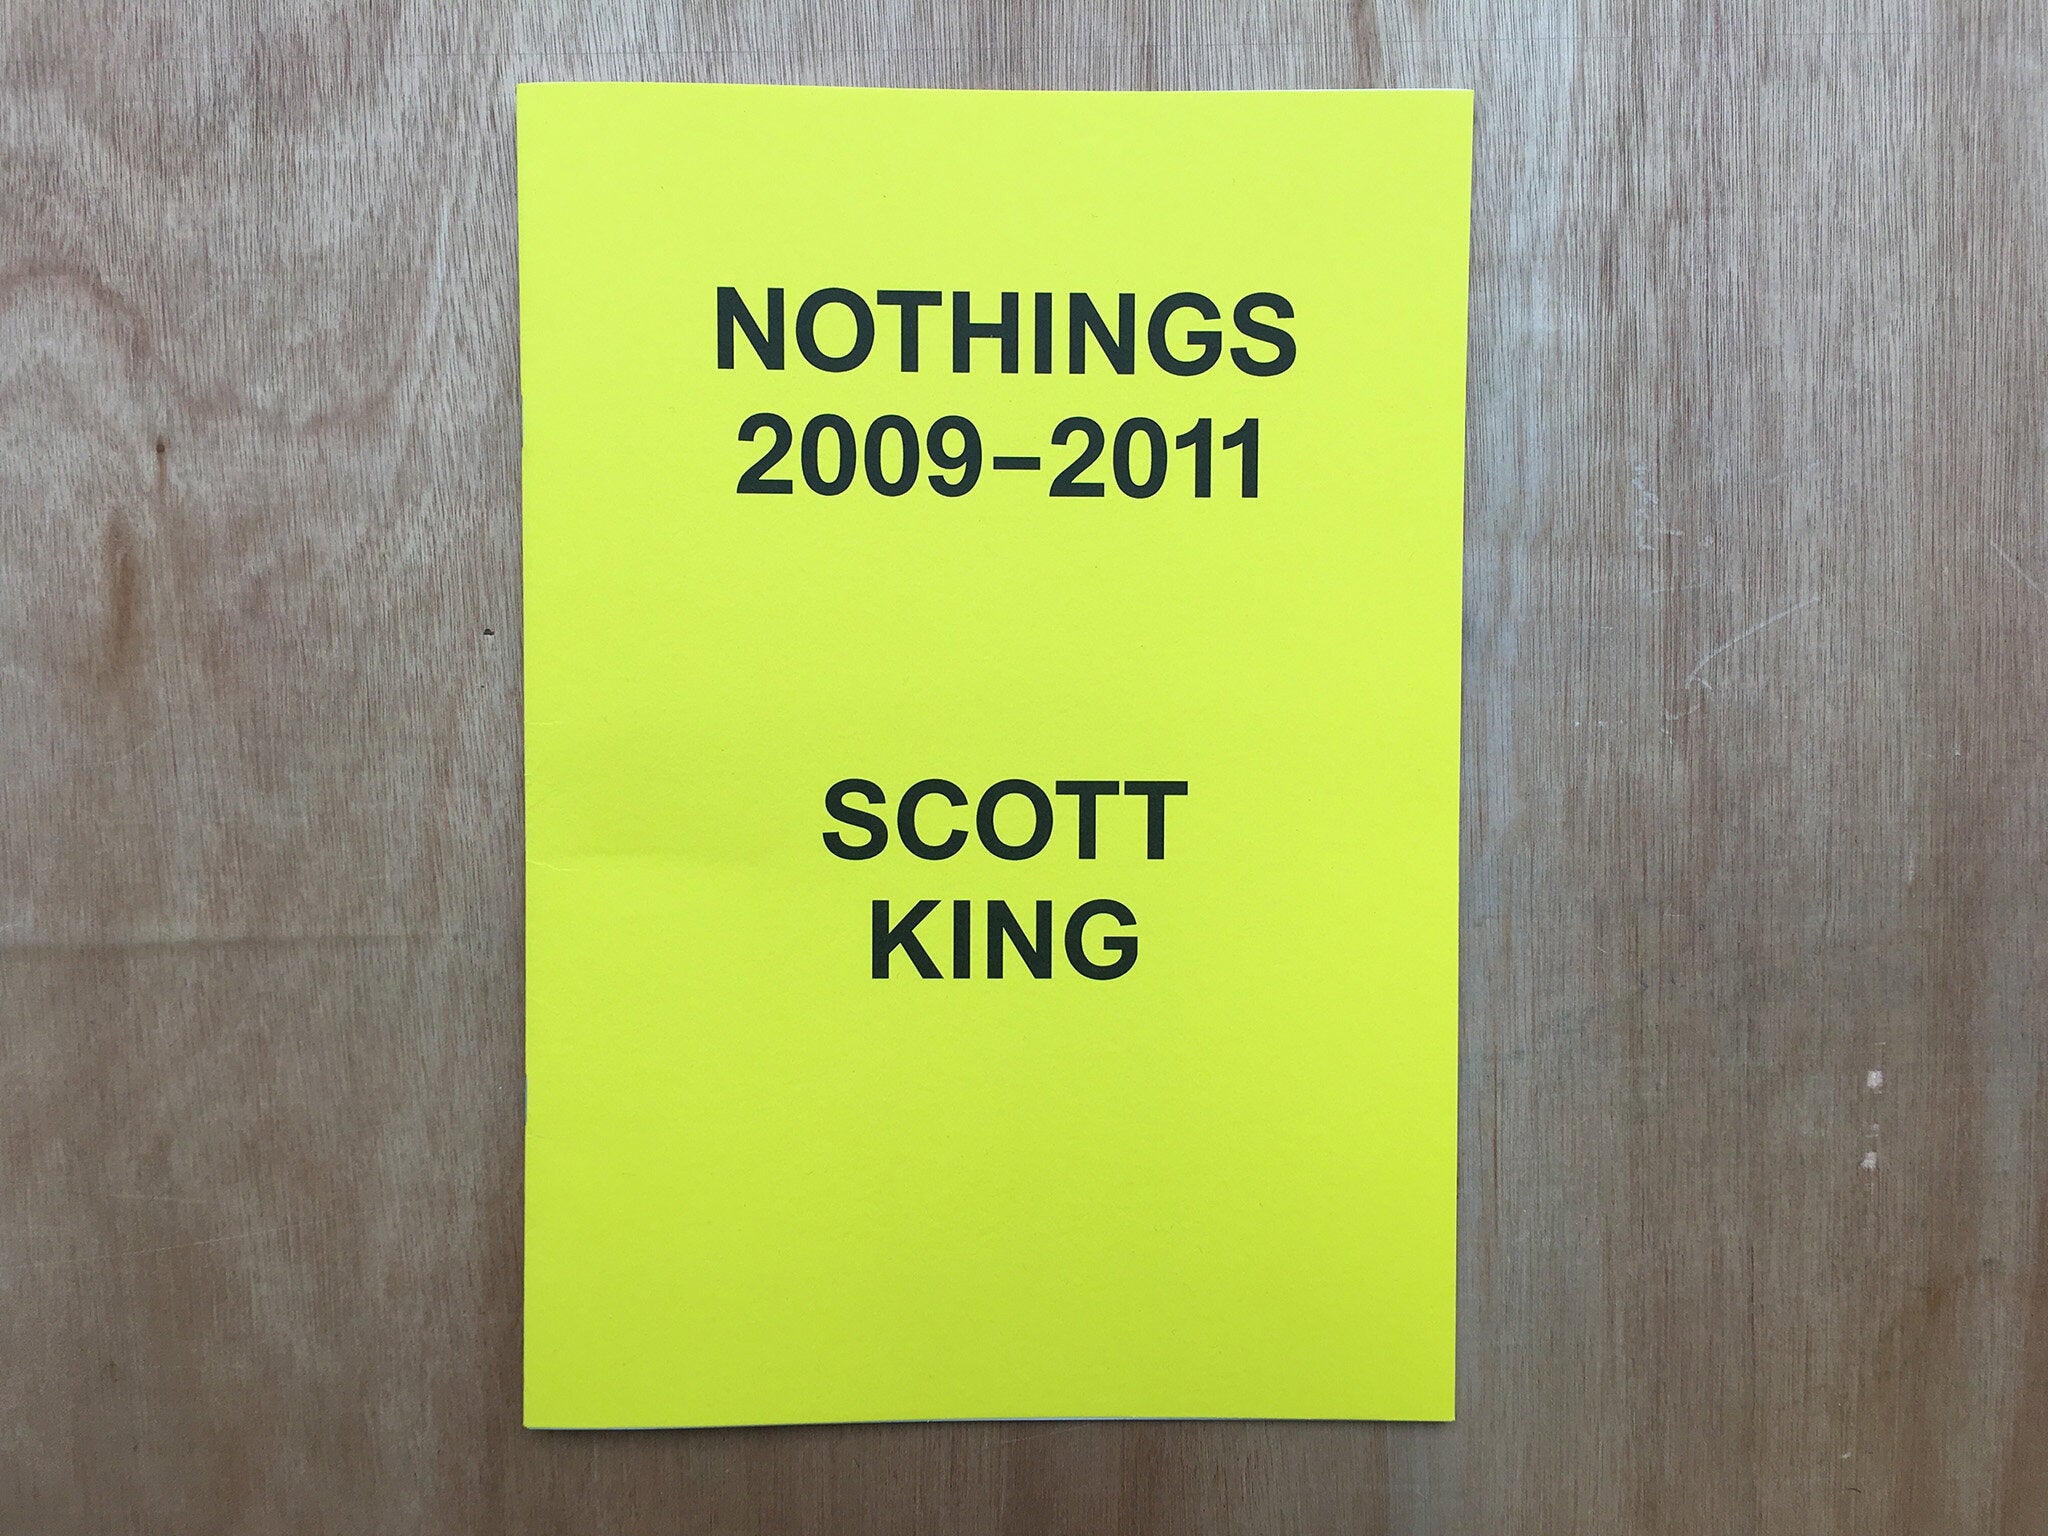 NOTHINGS 2009-2011 by Scott King